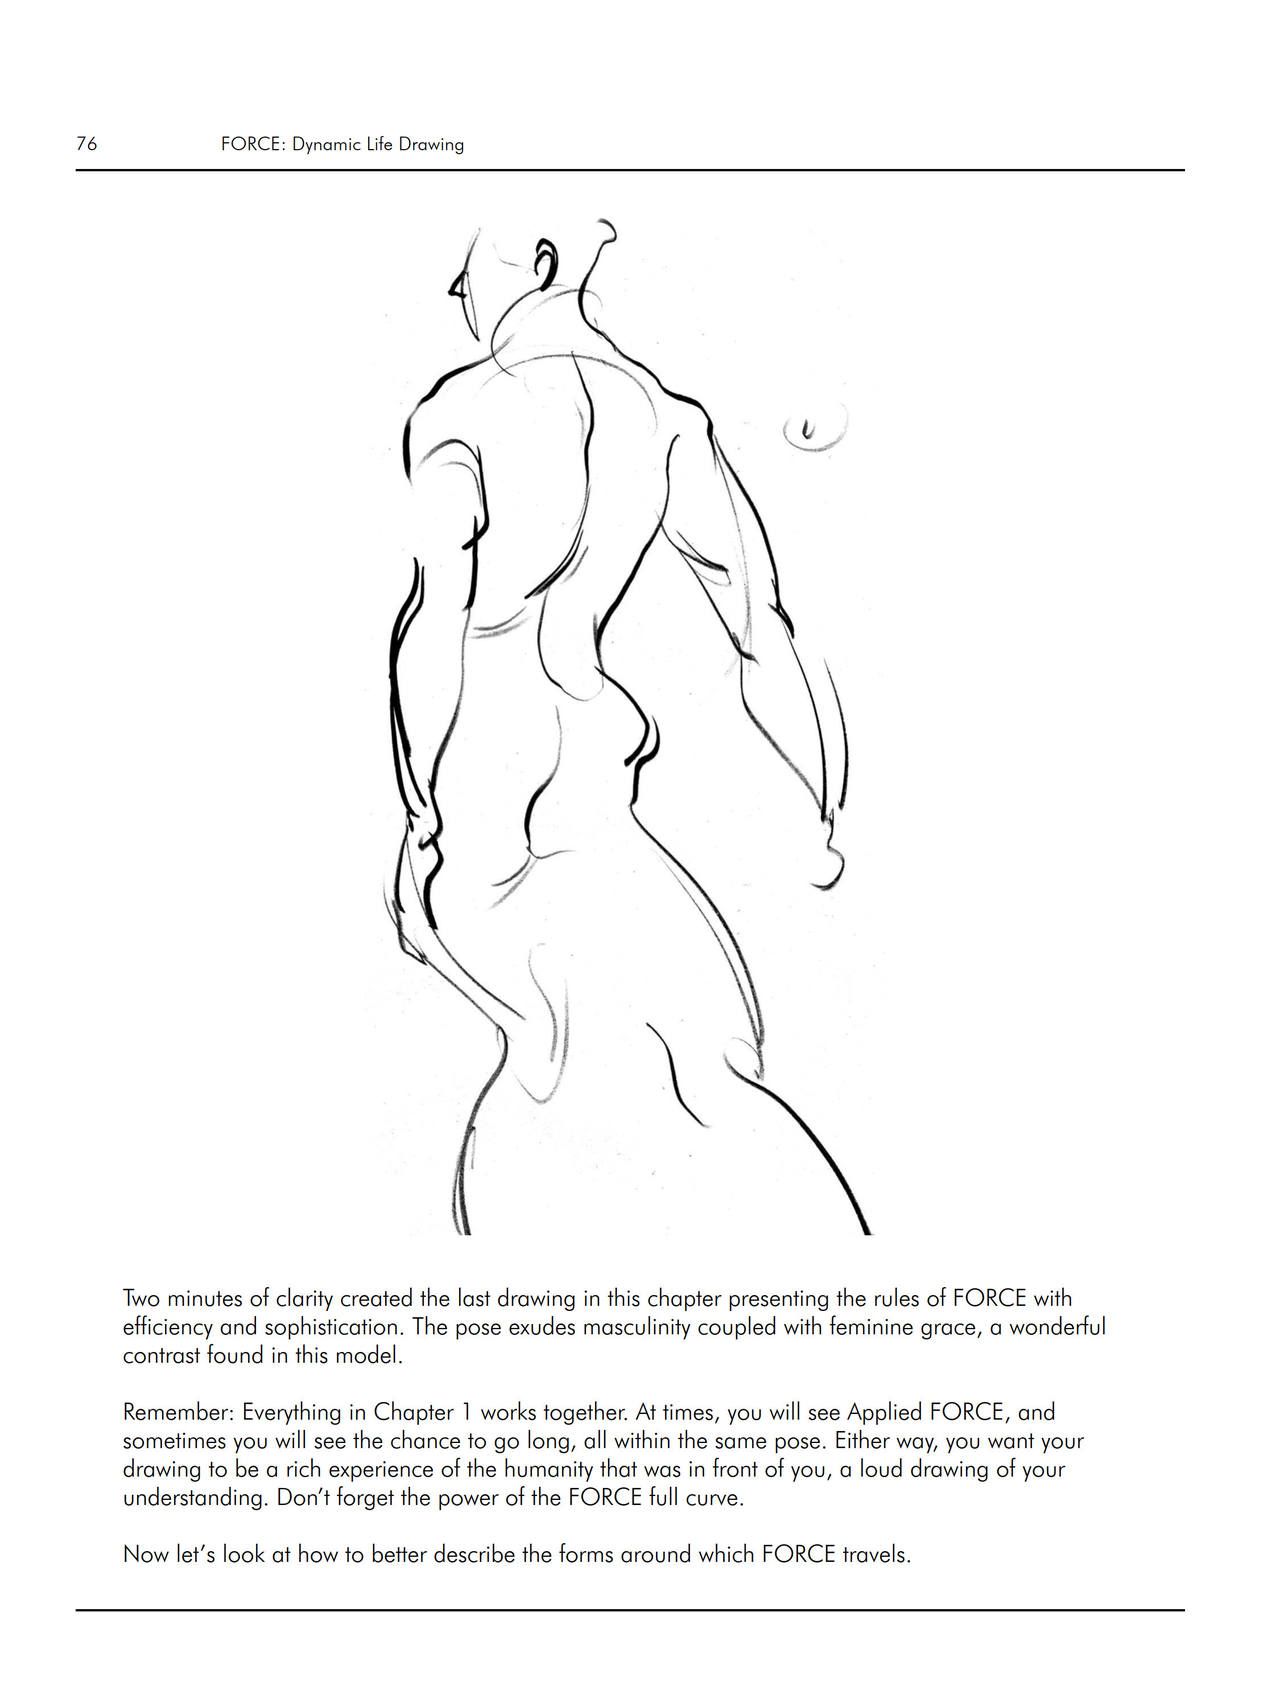 FORCE Dynamic Life Drawing 10th Anniversary Edition - Michael D. Mattesi [Digital] 99